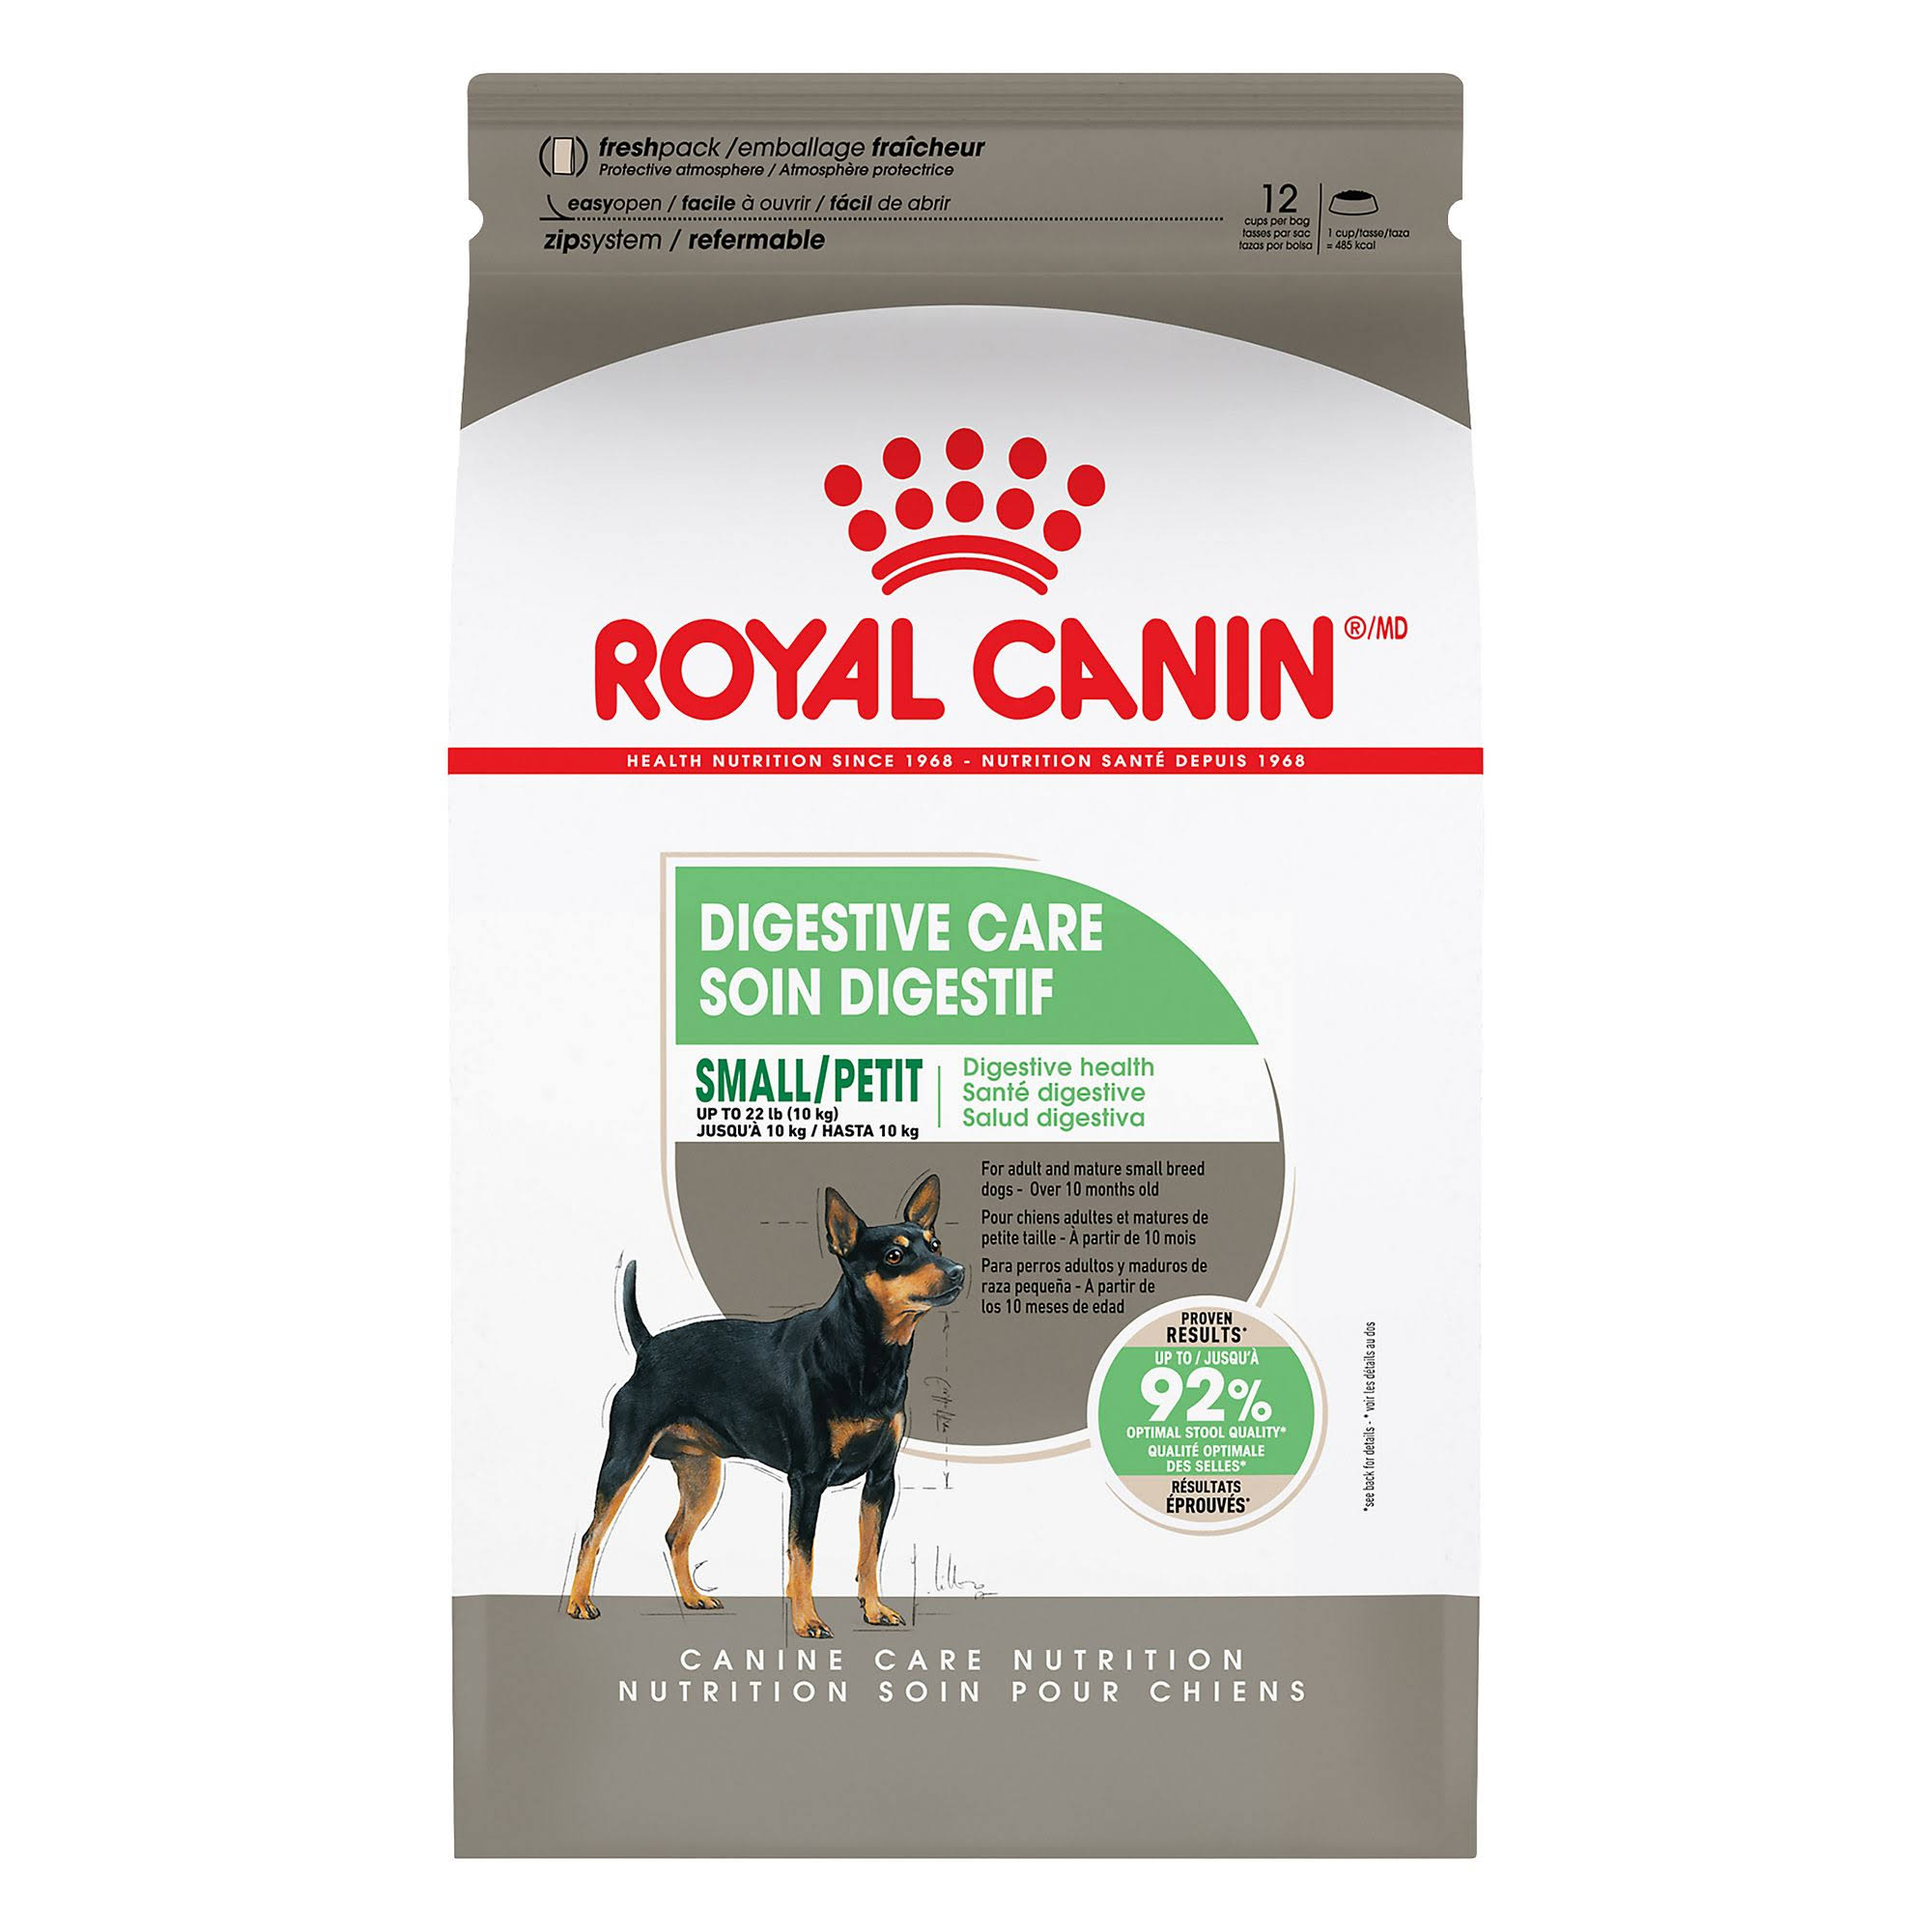 Royal Canin Rl45104 Size Health Nutrition Mini Special Dry Dog Food - 3.5lbs